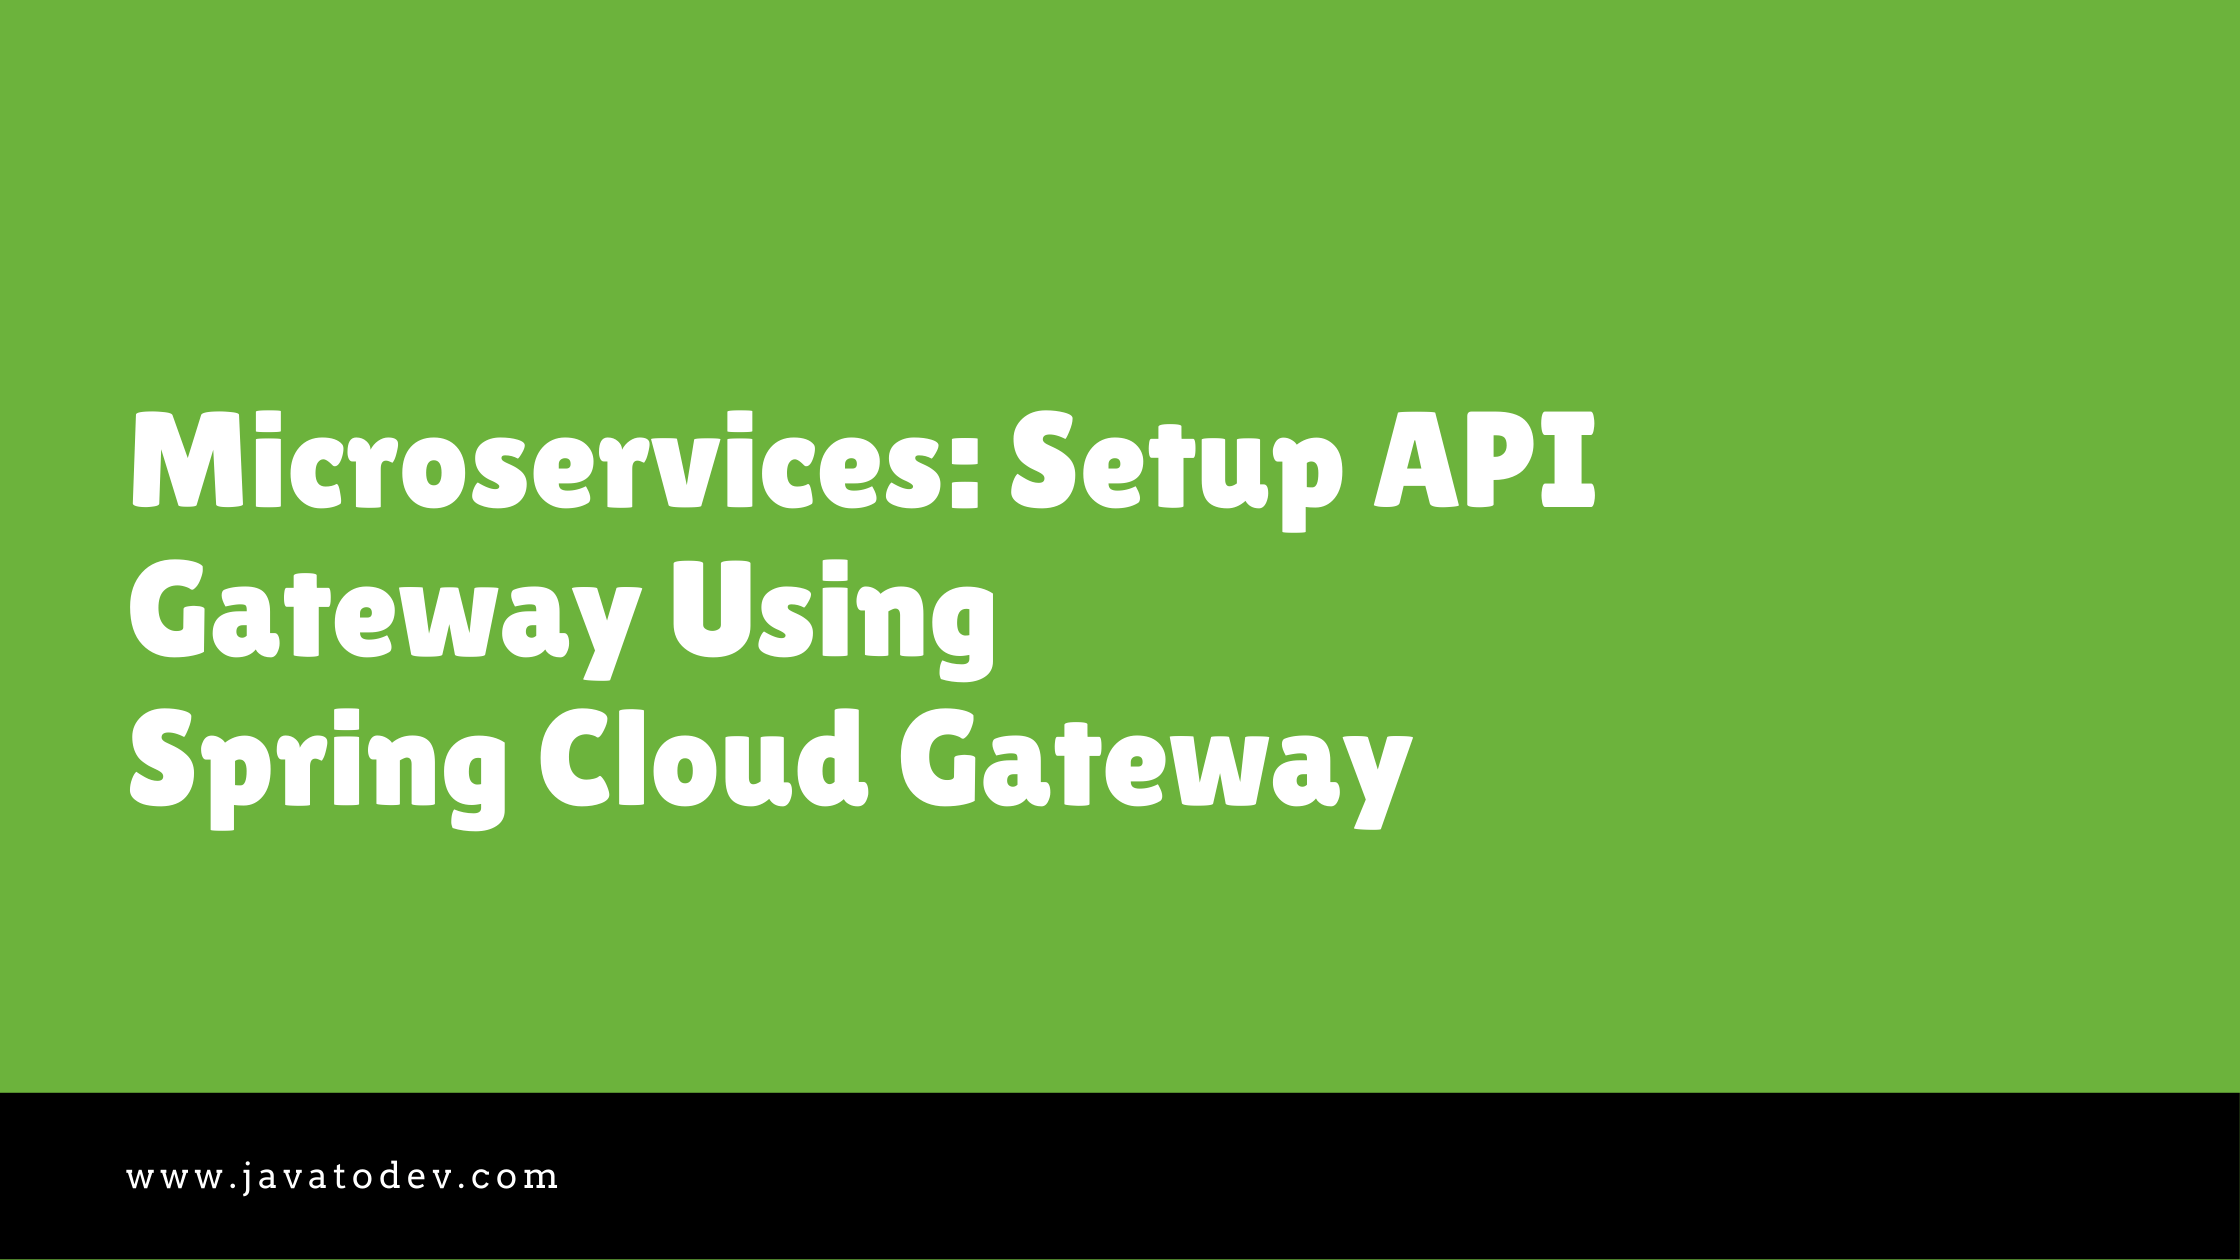 Microservices - Setup API Gateway Using Spring Cloud Gateway